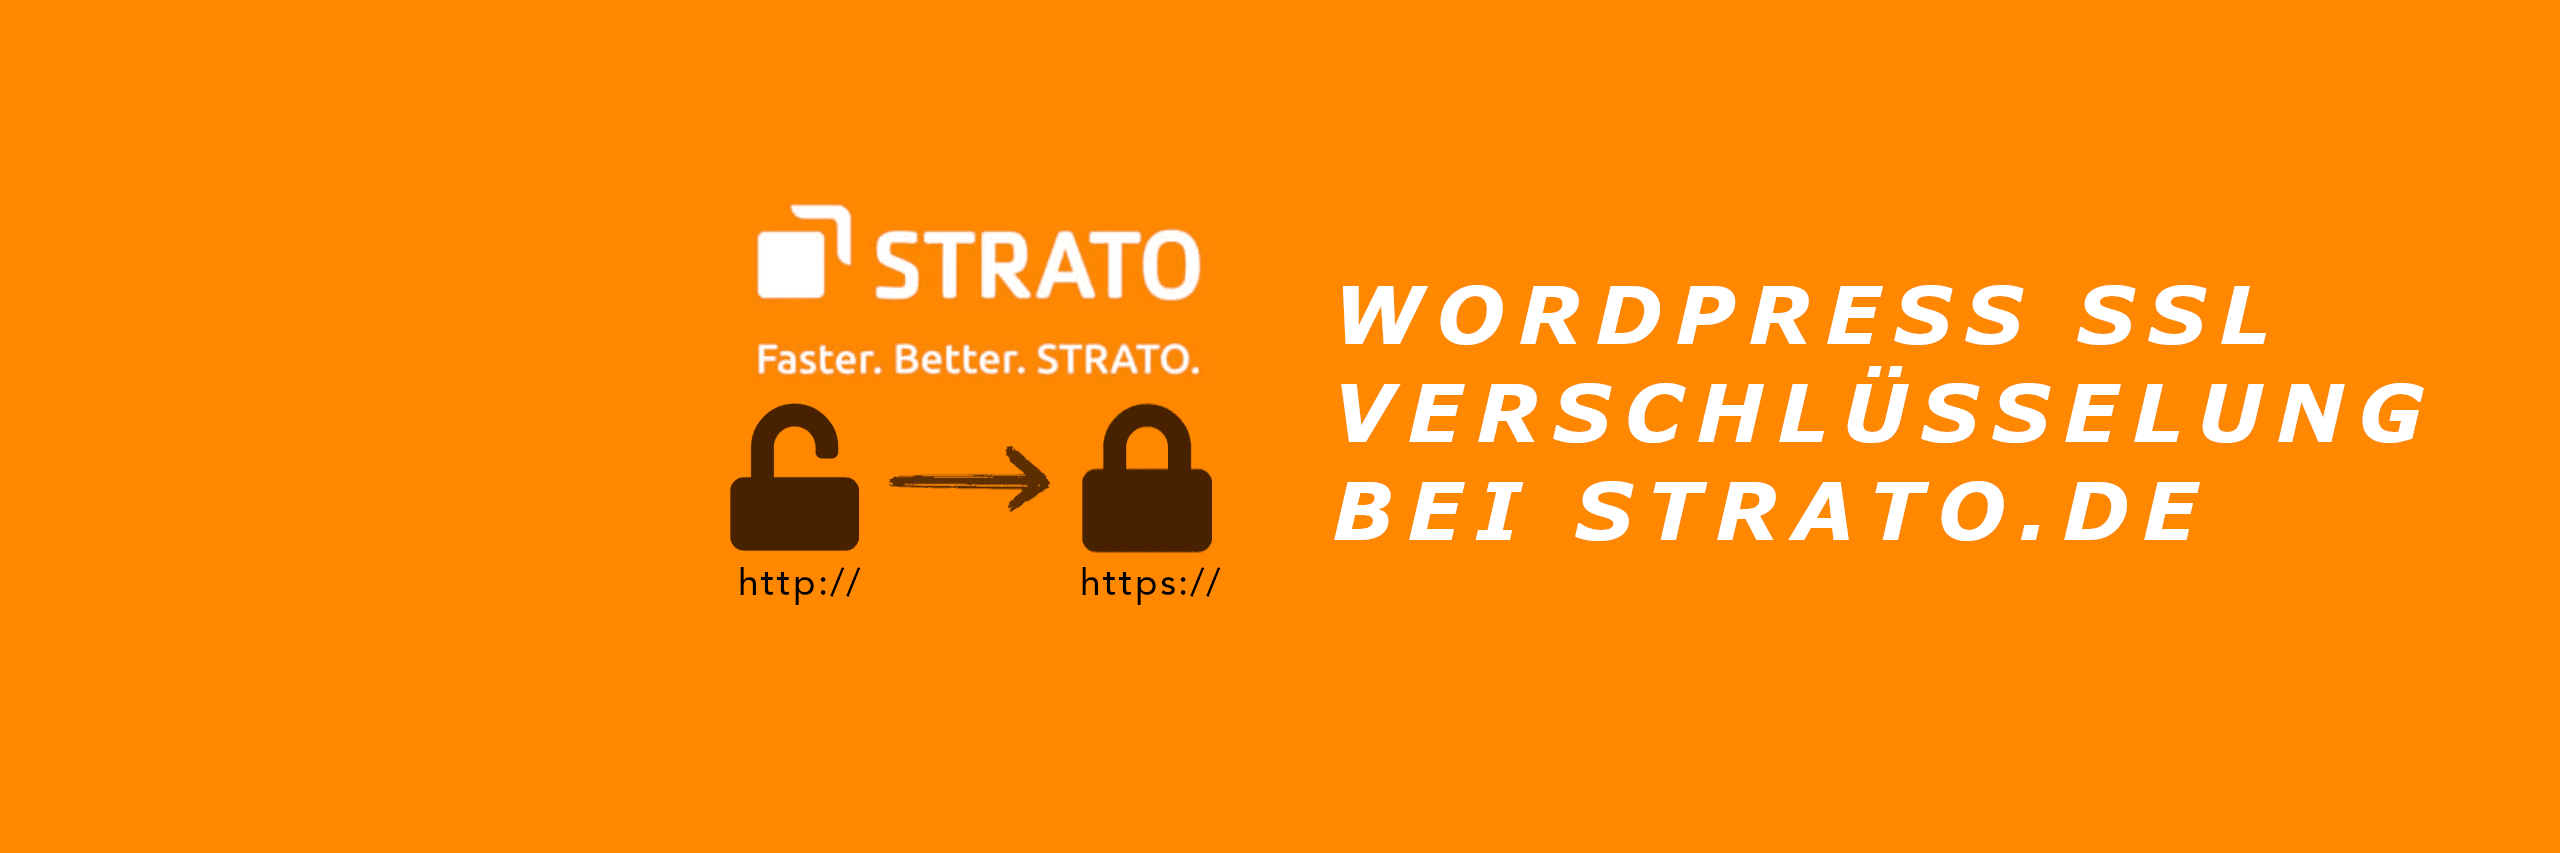 WordPress SSL Verschluesselung Strato p1 commerce